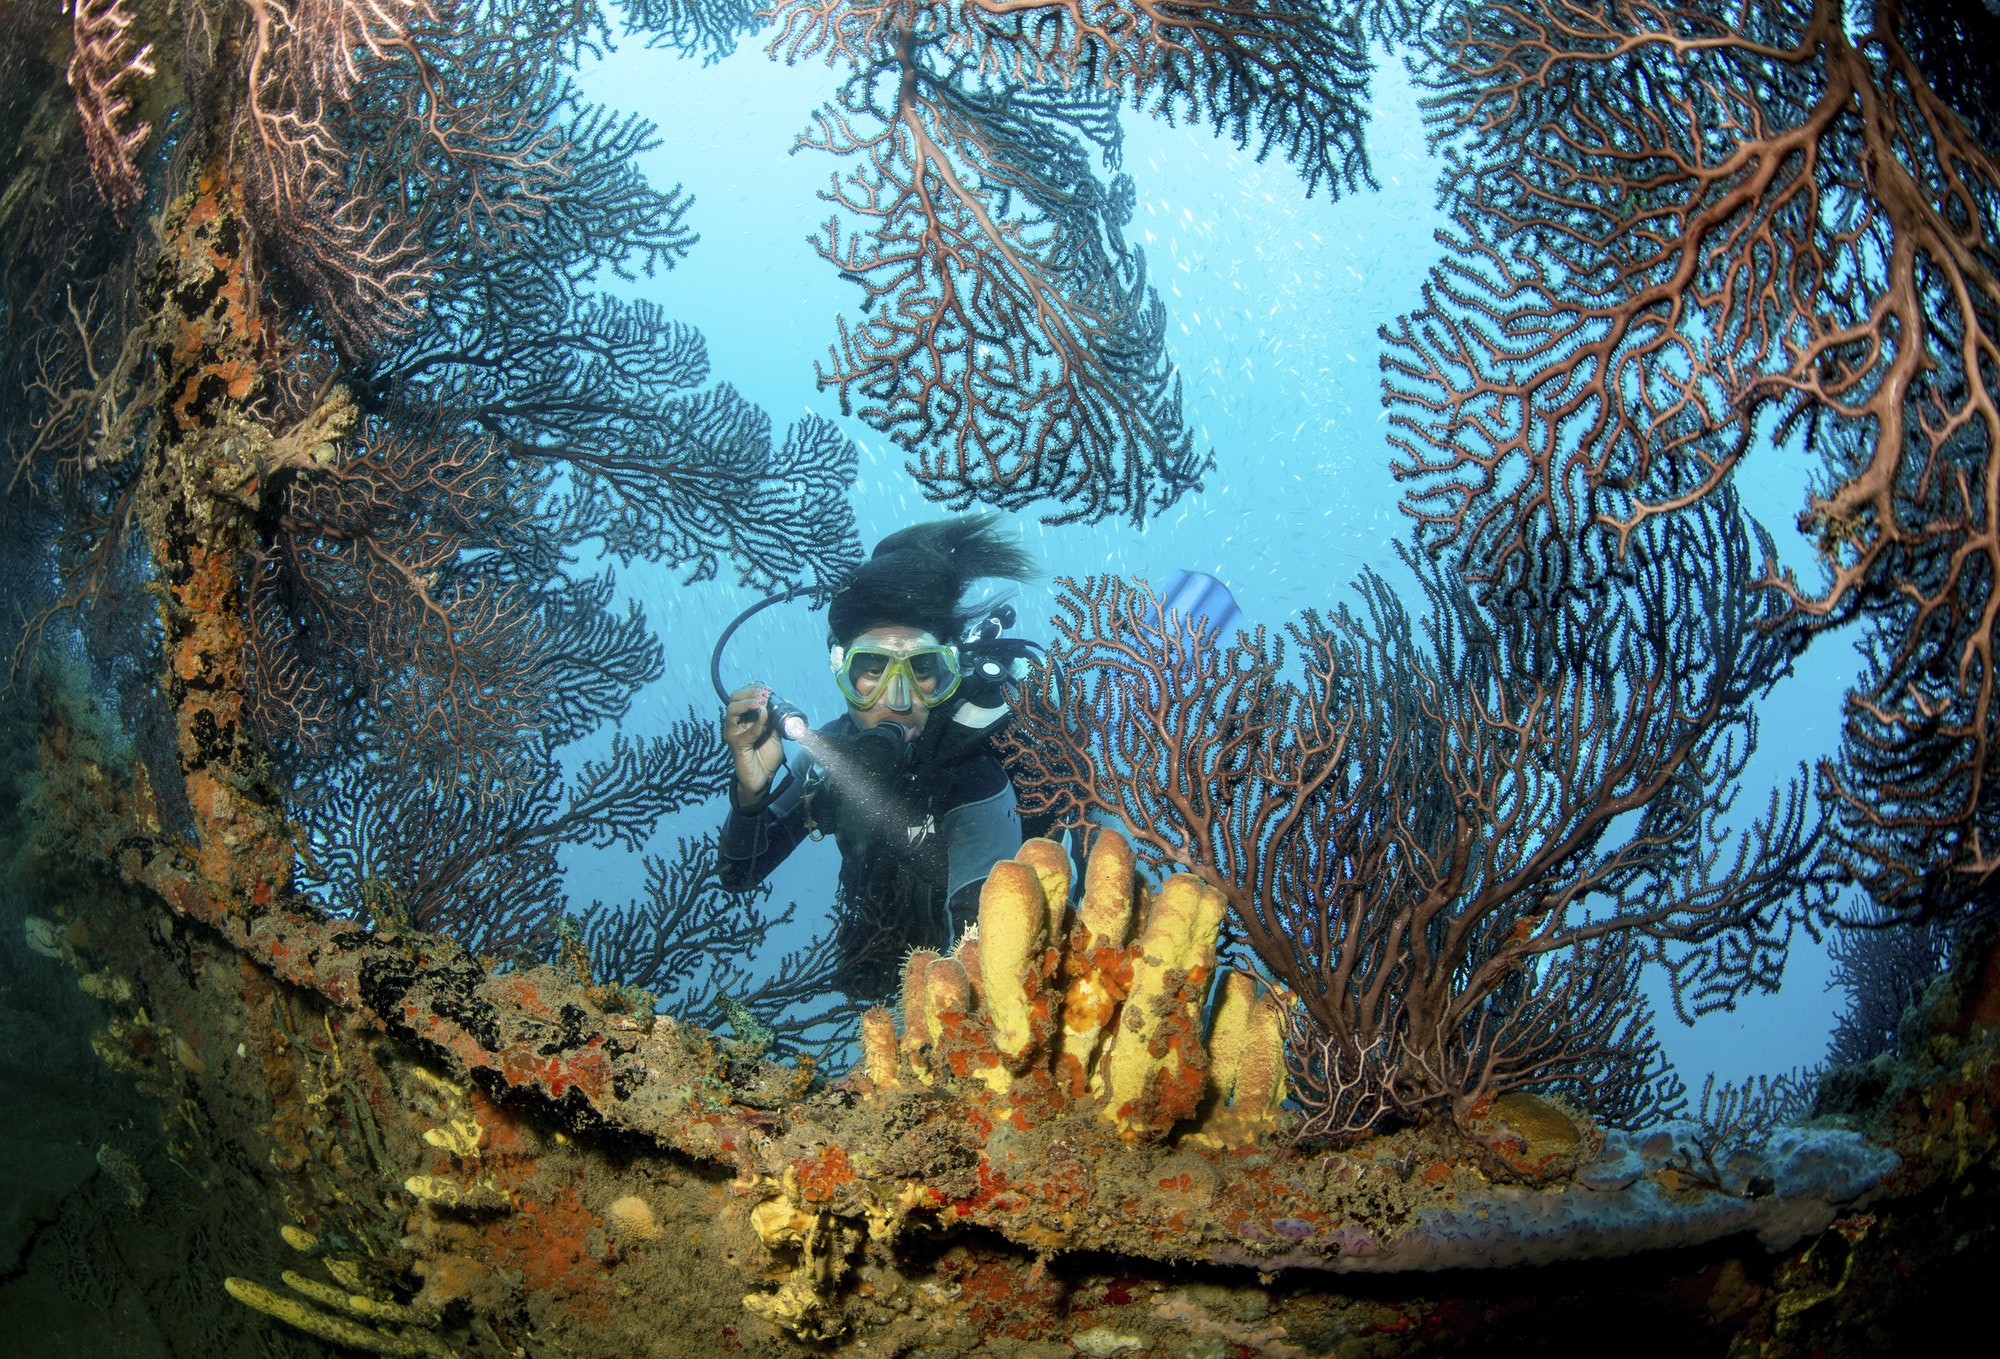 Wreck of a ship sunk intentionally as an artificial reef. A scuba diver with a flashlight exploring.